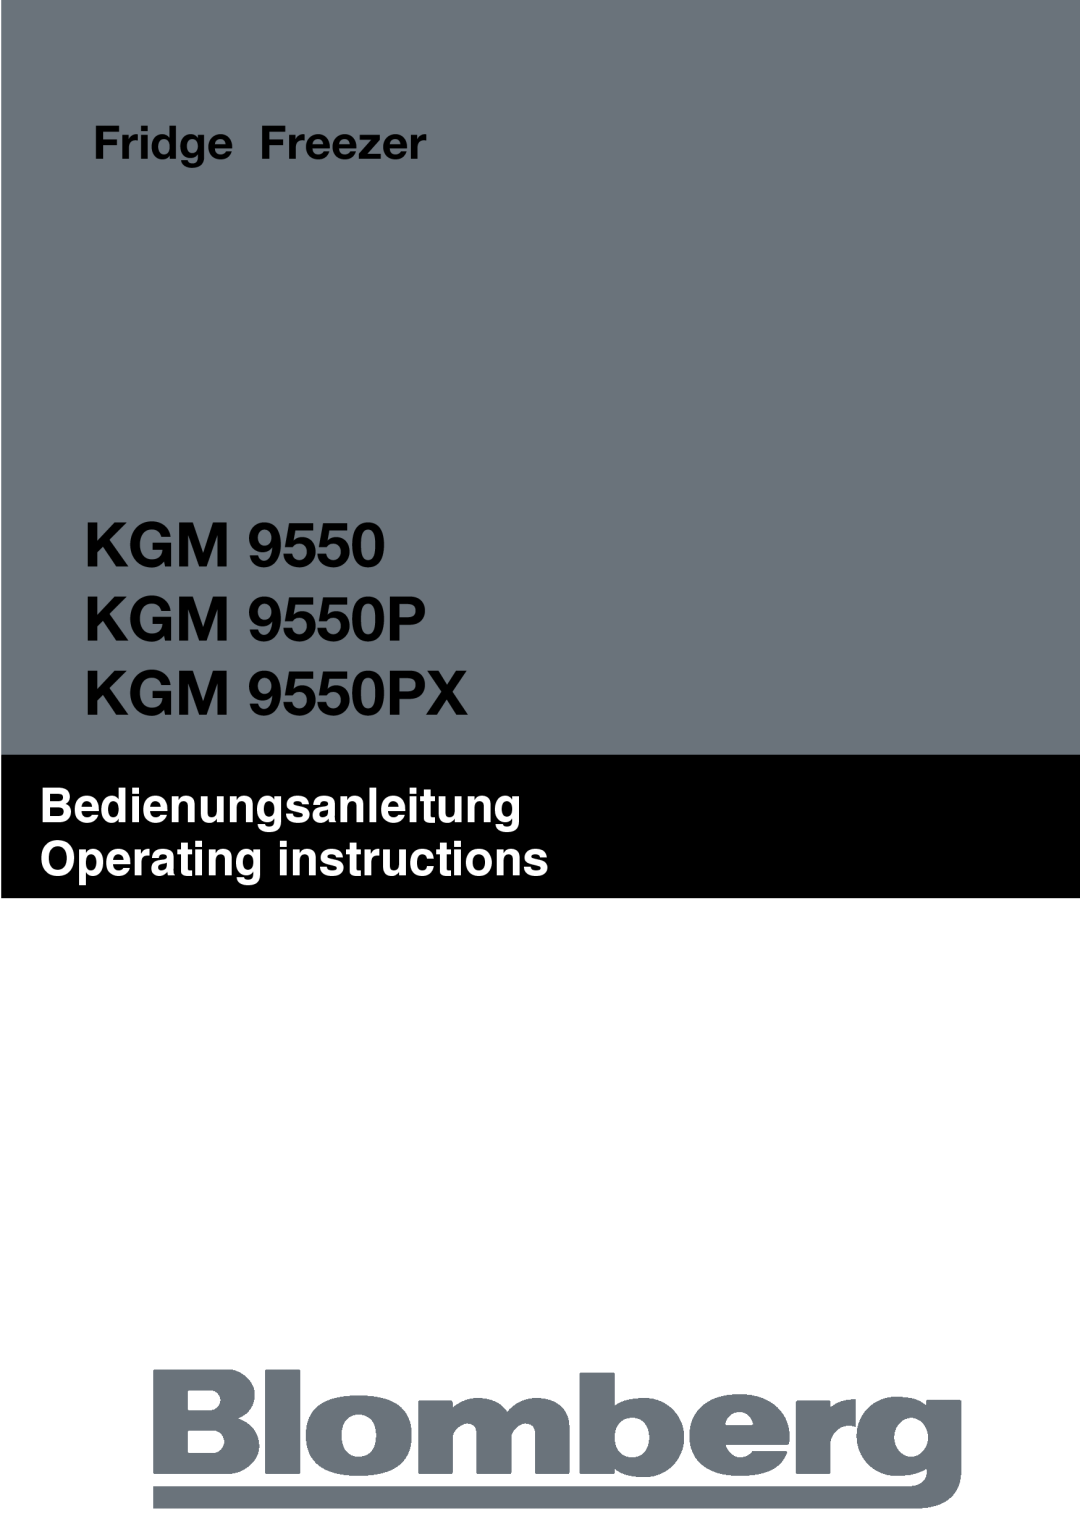 Blomberg manual KGM 9550 KGM 9550P KGM 9550PX, Bedienungsanleitung Operating instructions, Fridge Freezer 